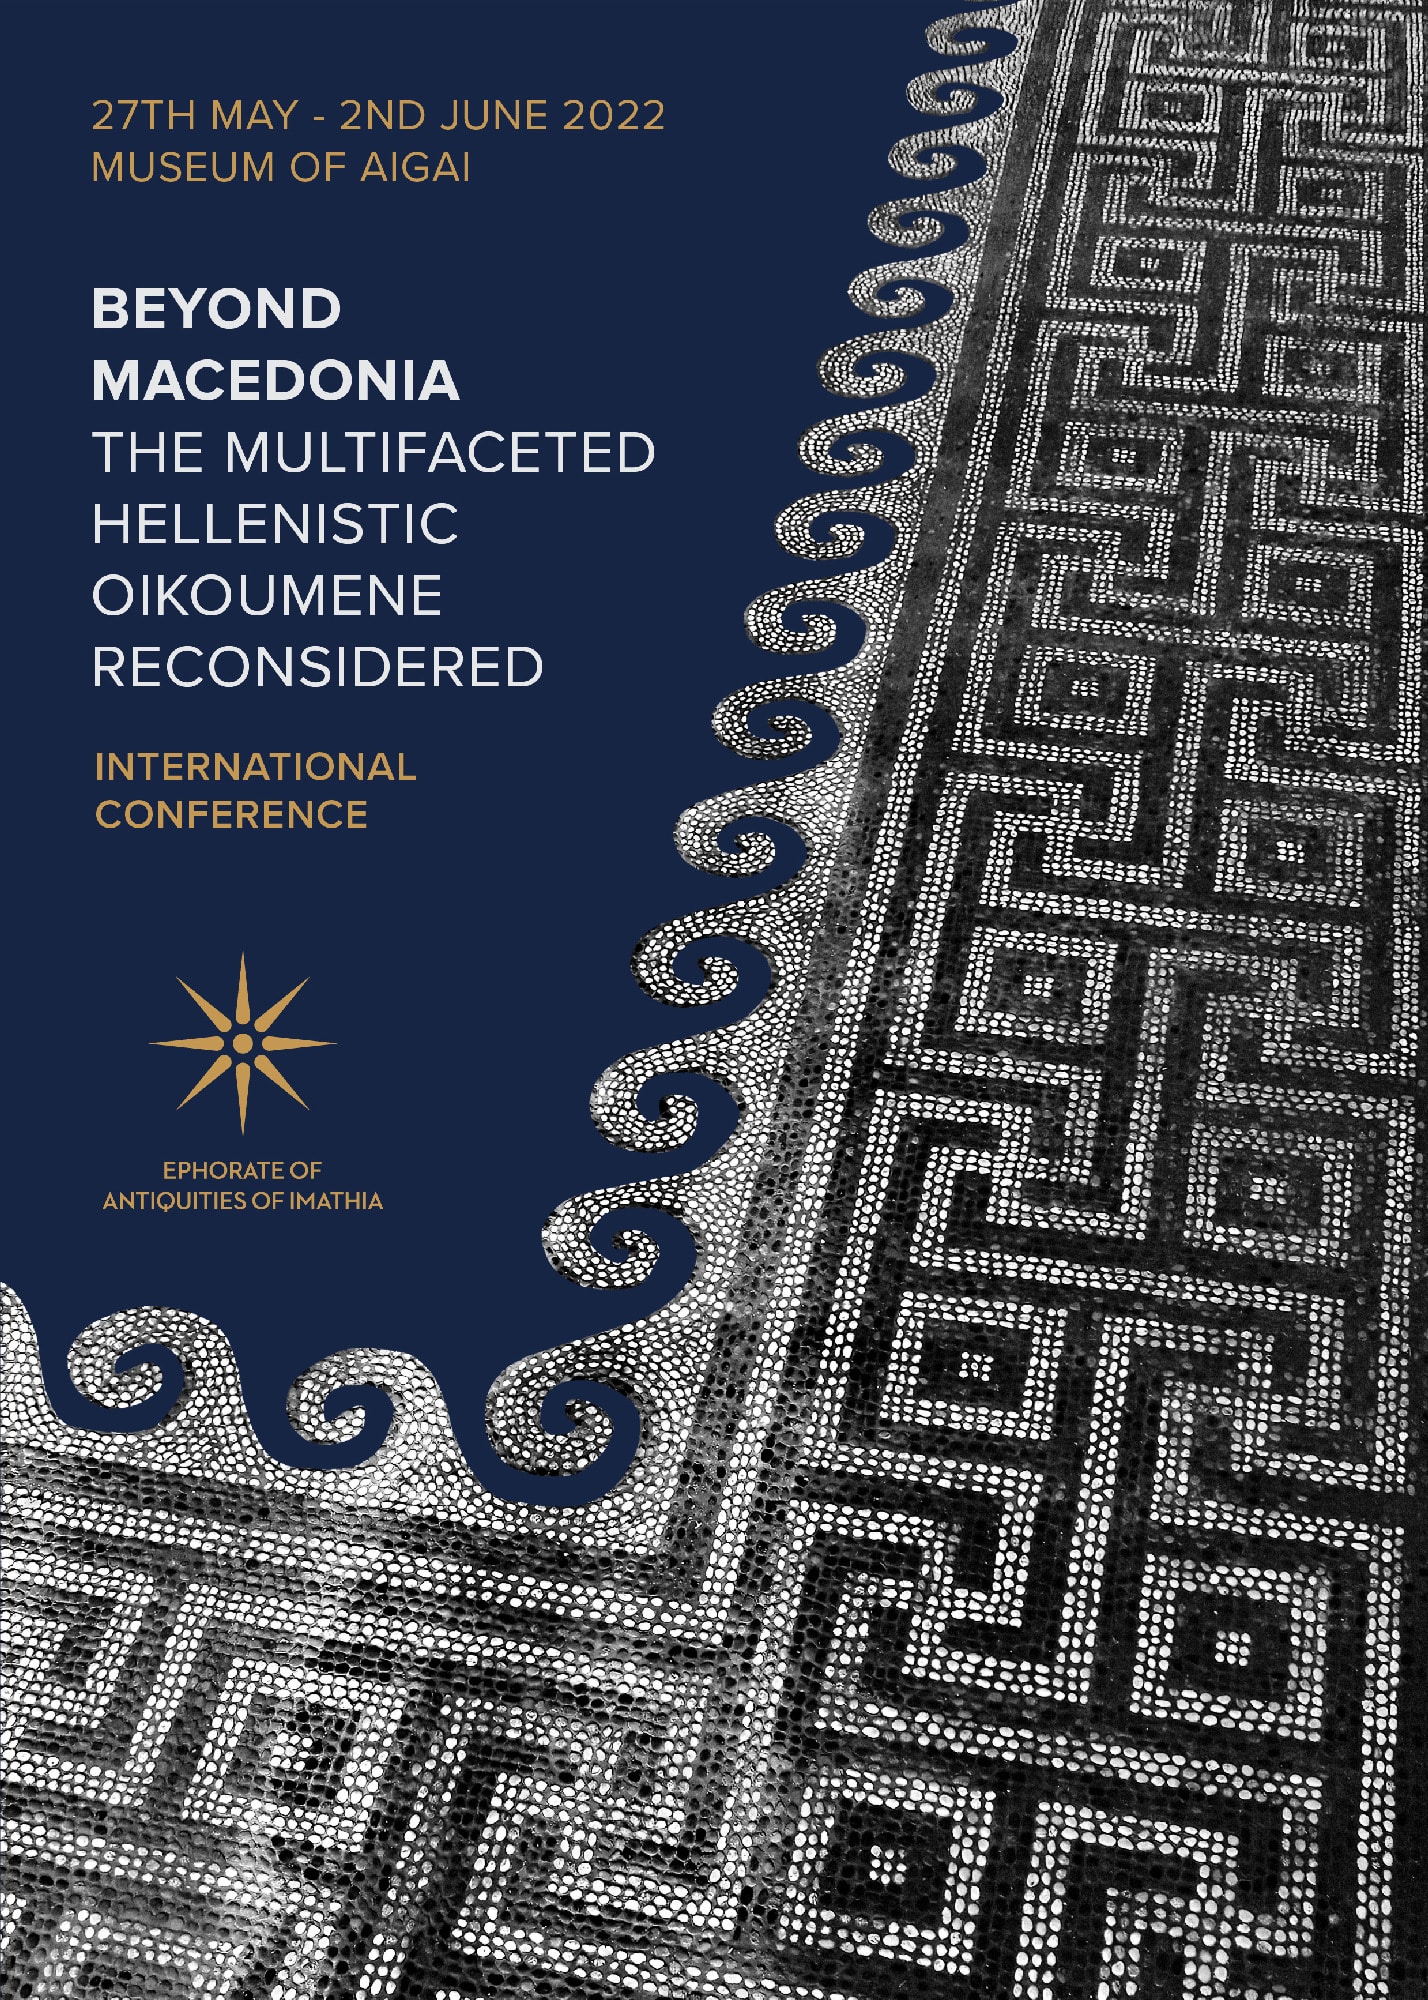 Beyond Macedonia Poster 24 5 2022 - Μέγας Αλέξανδρος: Επί εποχής του Έλληνα στρατηλάτη κόπηκαν τα περισσότερα χρυσά νομίσματα στην παγκόσμια ιστορία